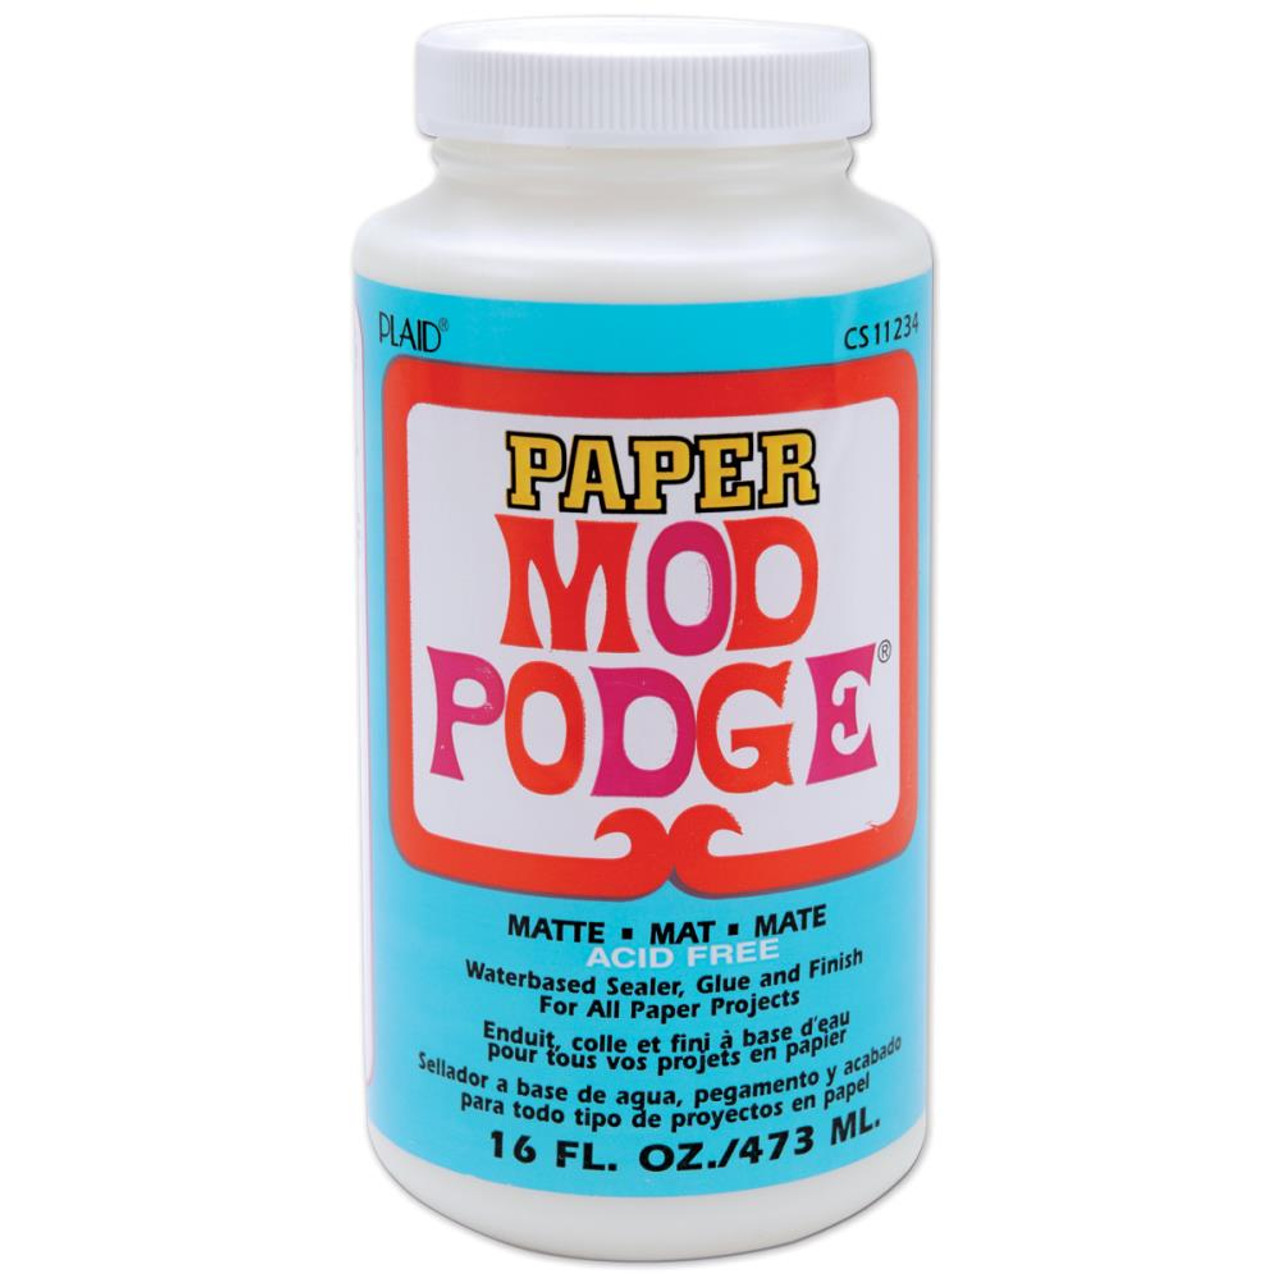 Mod Podge Paper Gloss Finish - 16 oz.